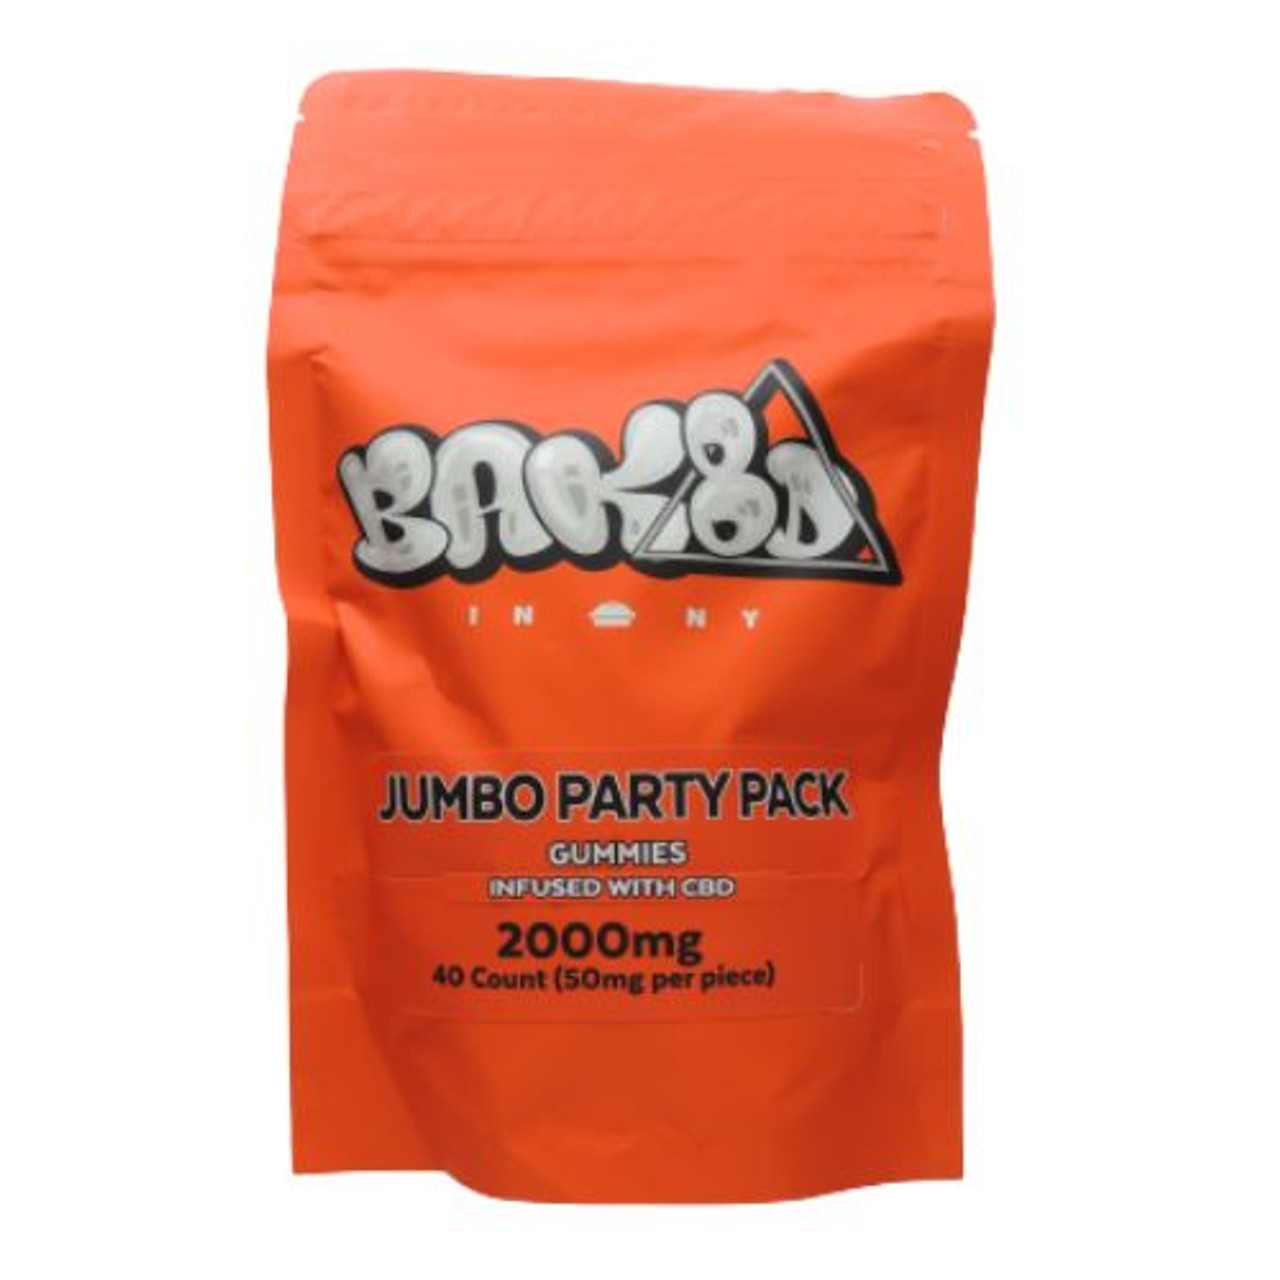 Bak8d 2000mg CBD Jumbo Party Pack - 40 ct. Bag